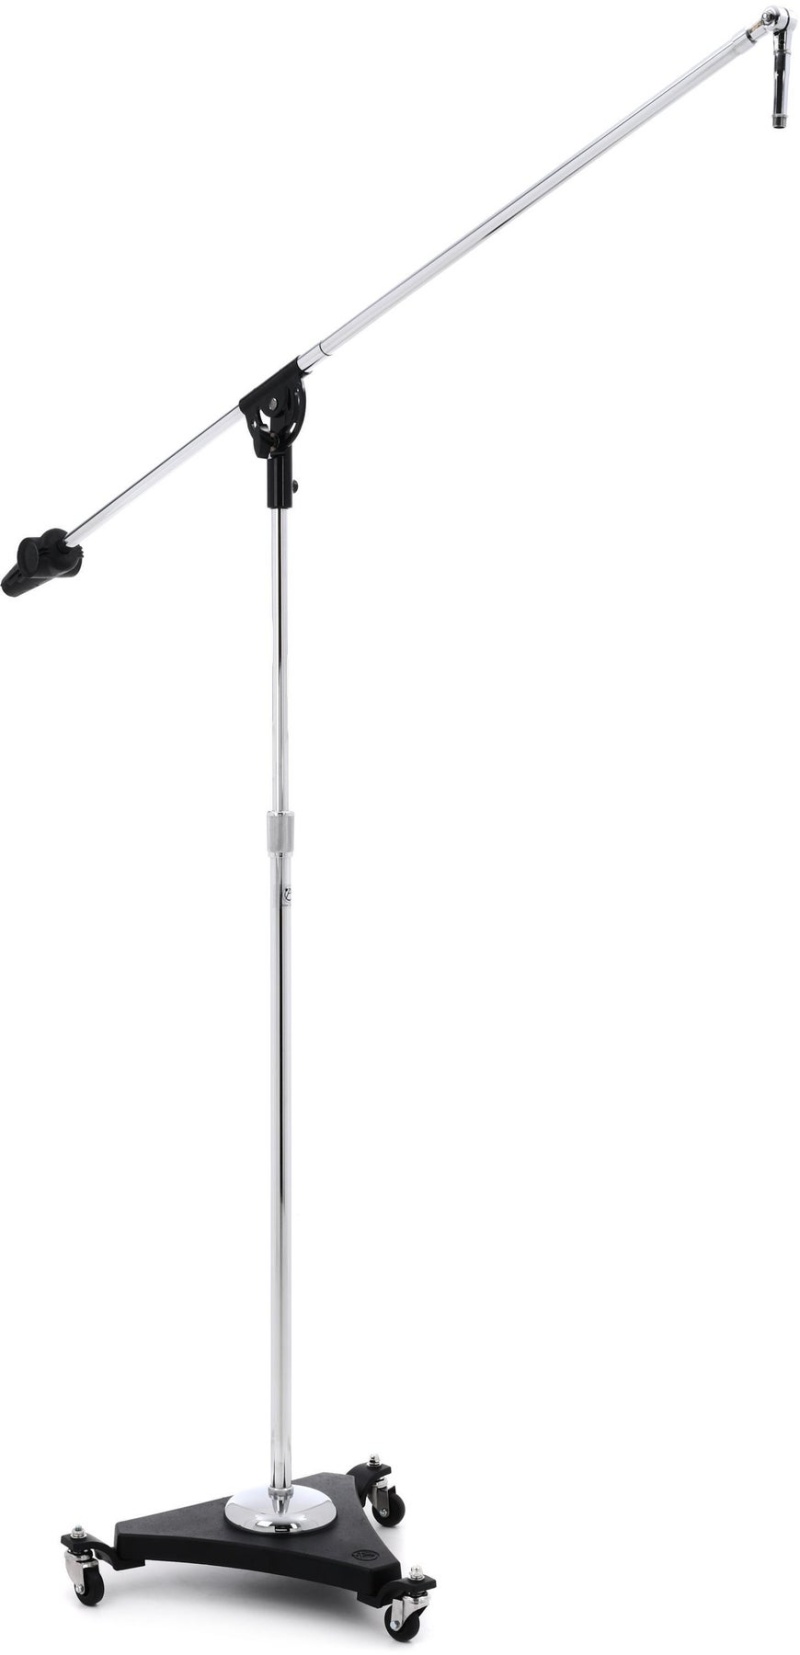 Atlasied Studio Boom Microphone Stand With Wheels - Chrome